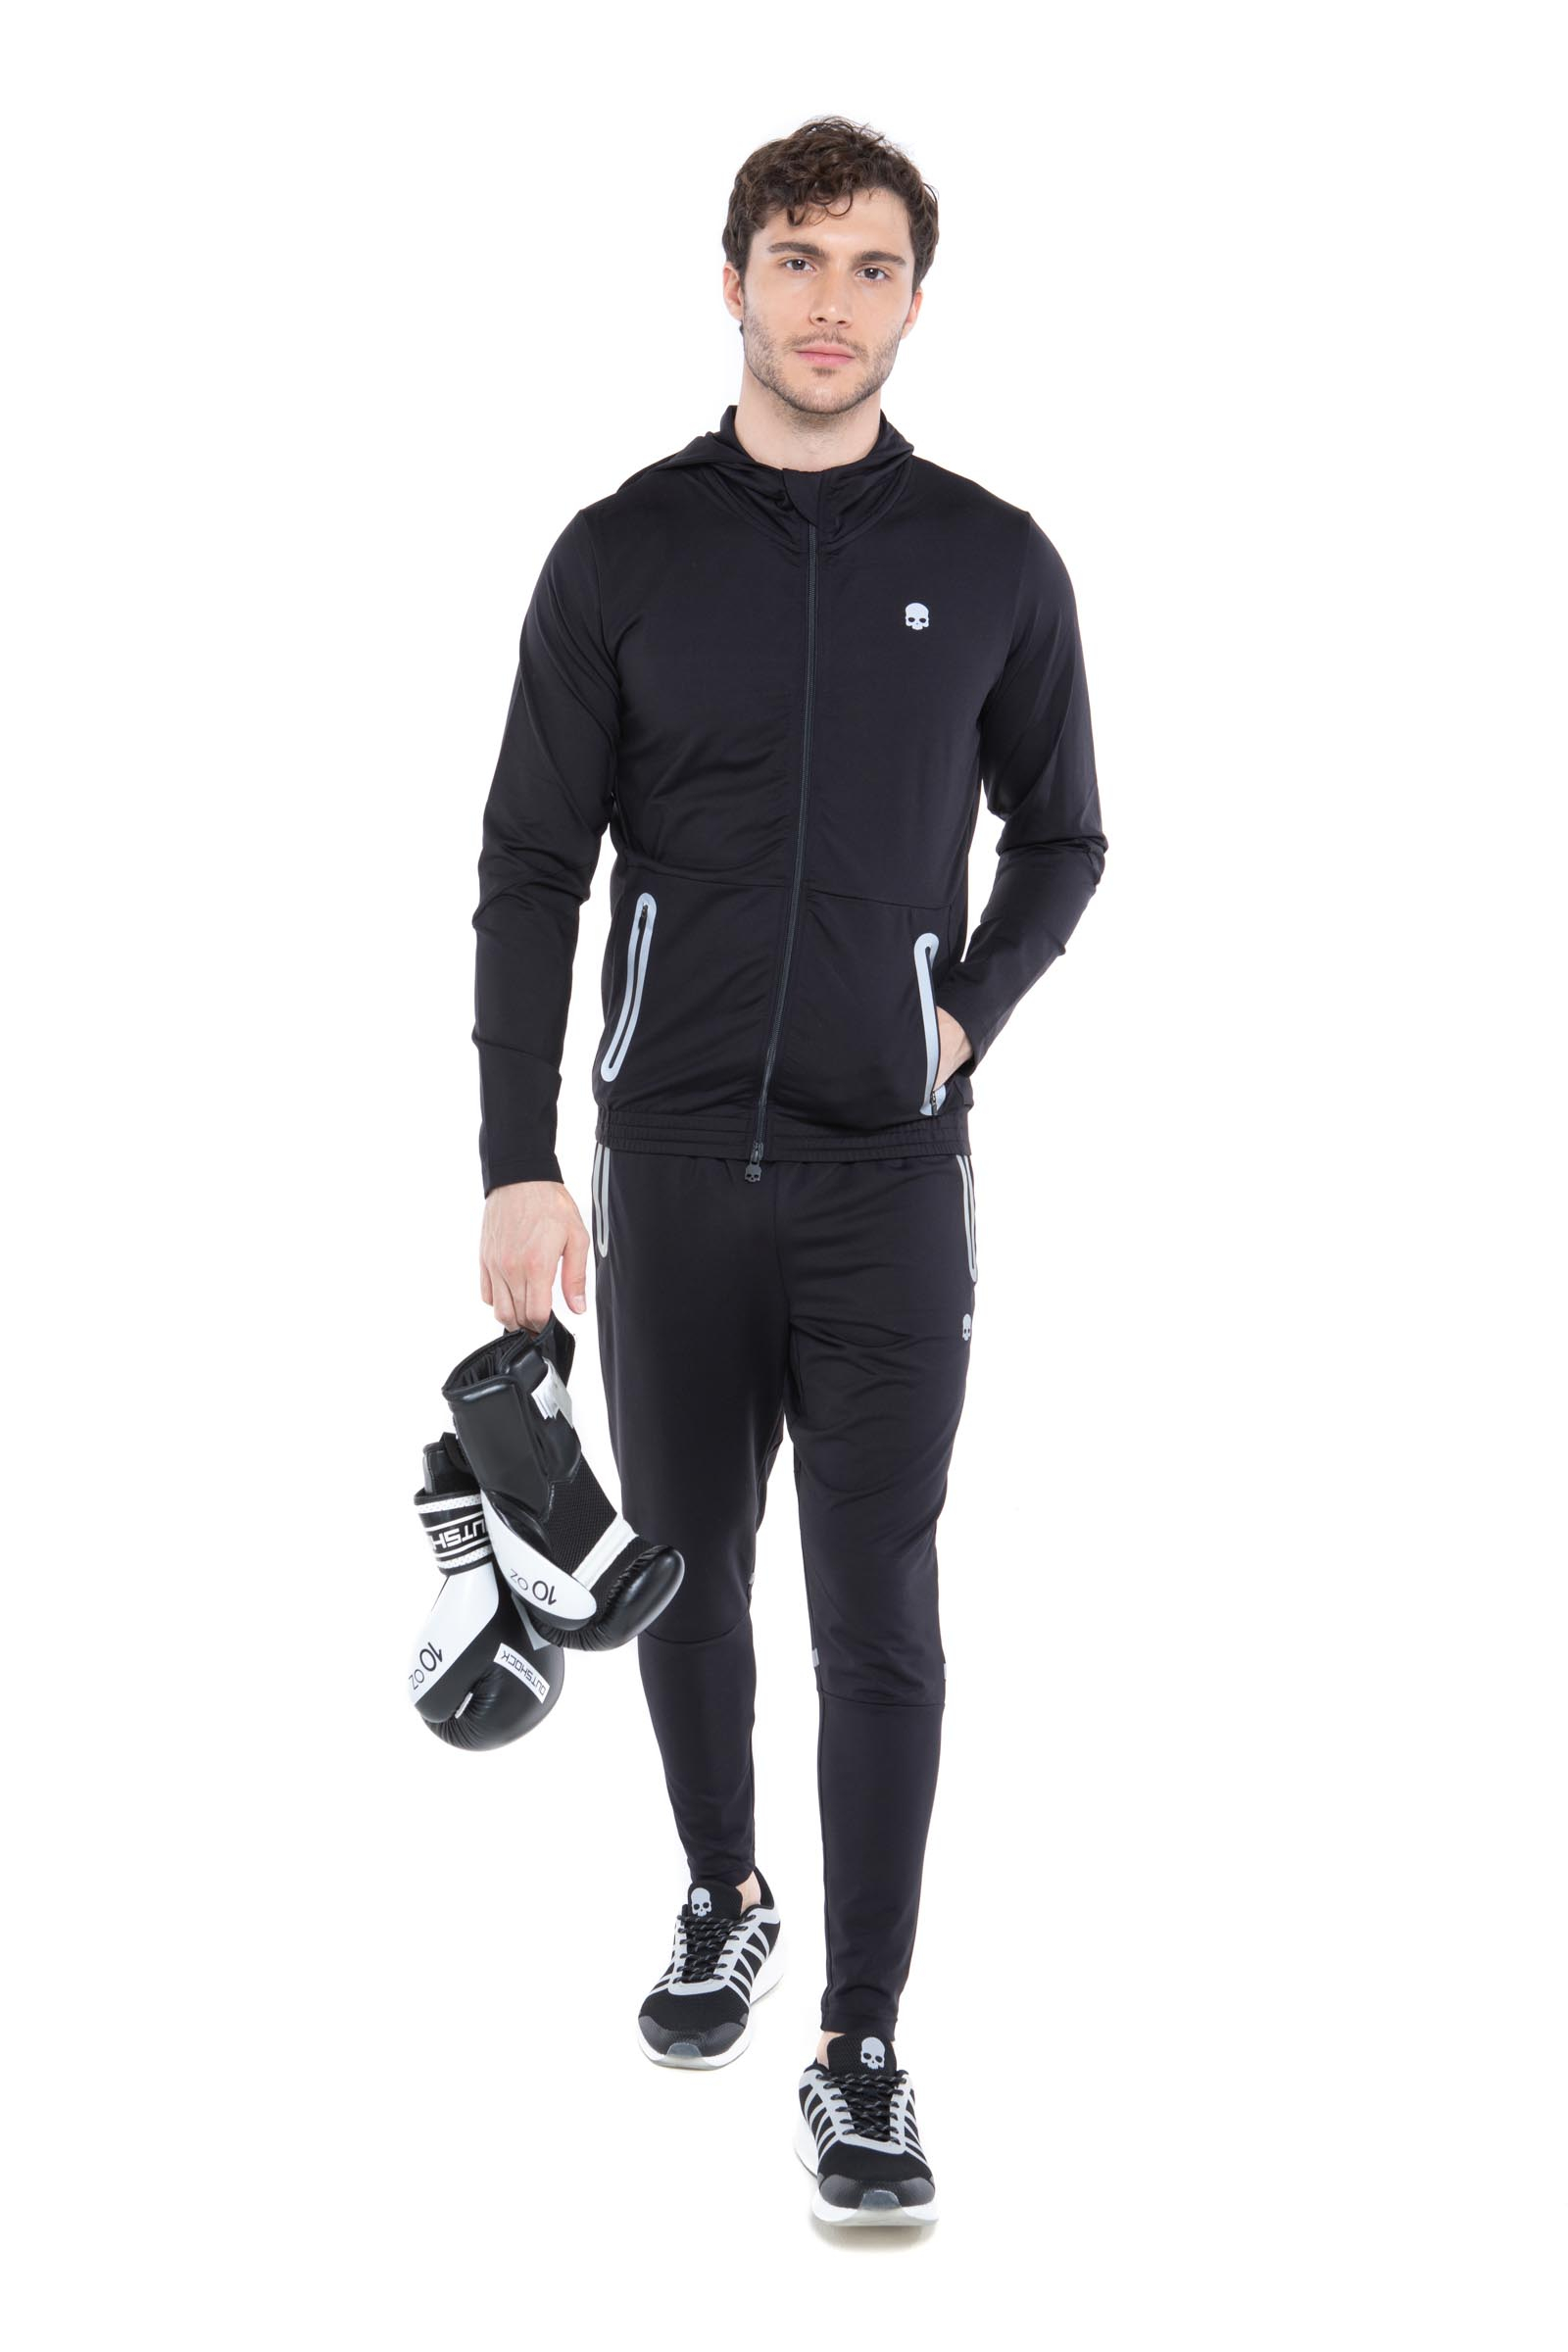 DARK RUNNING SWEATSHIRT - Abbigliamento - Outlet Hydrogen - Abbigliamento sportivo